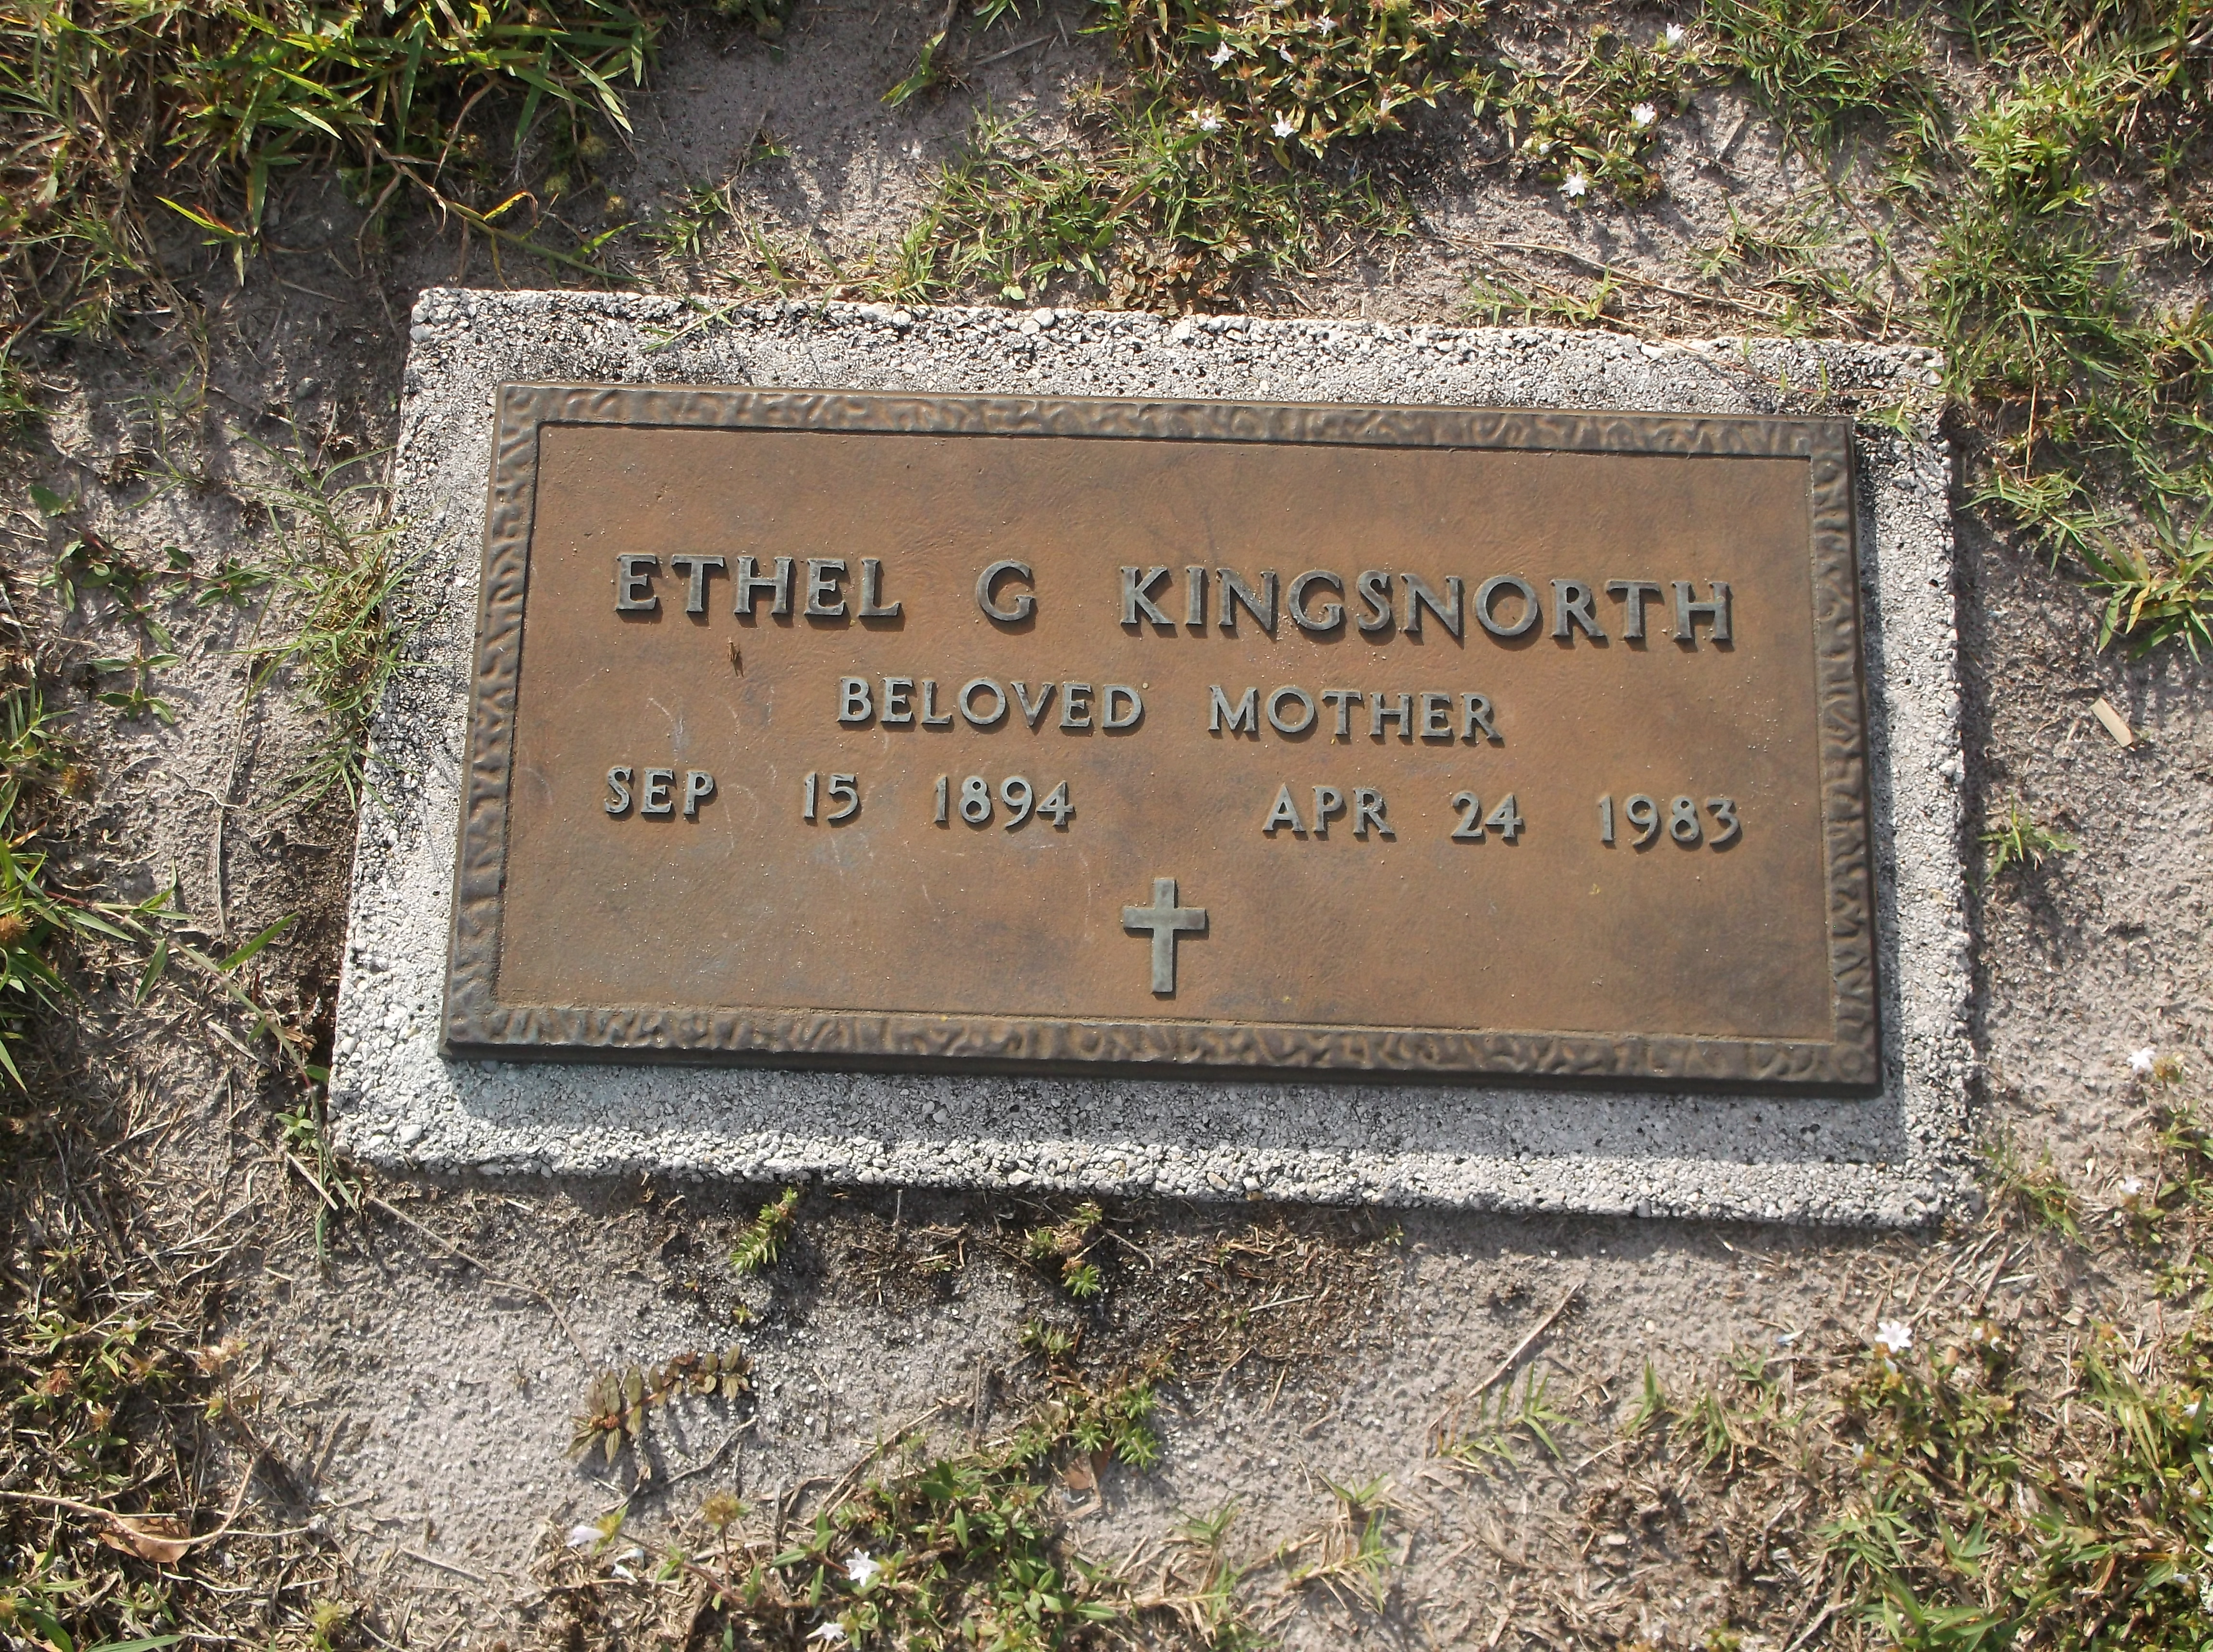 Ethel G Kingsnorth